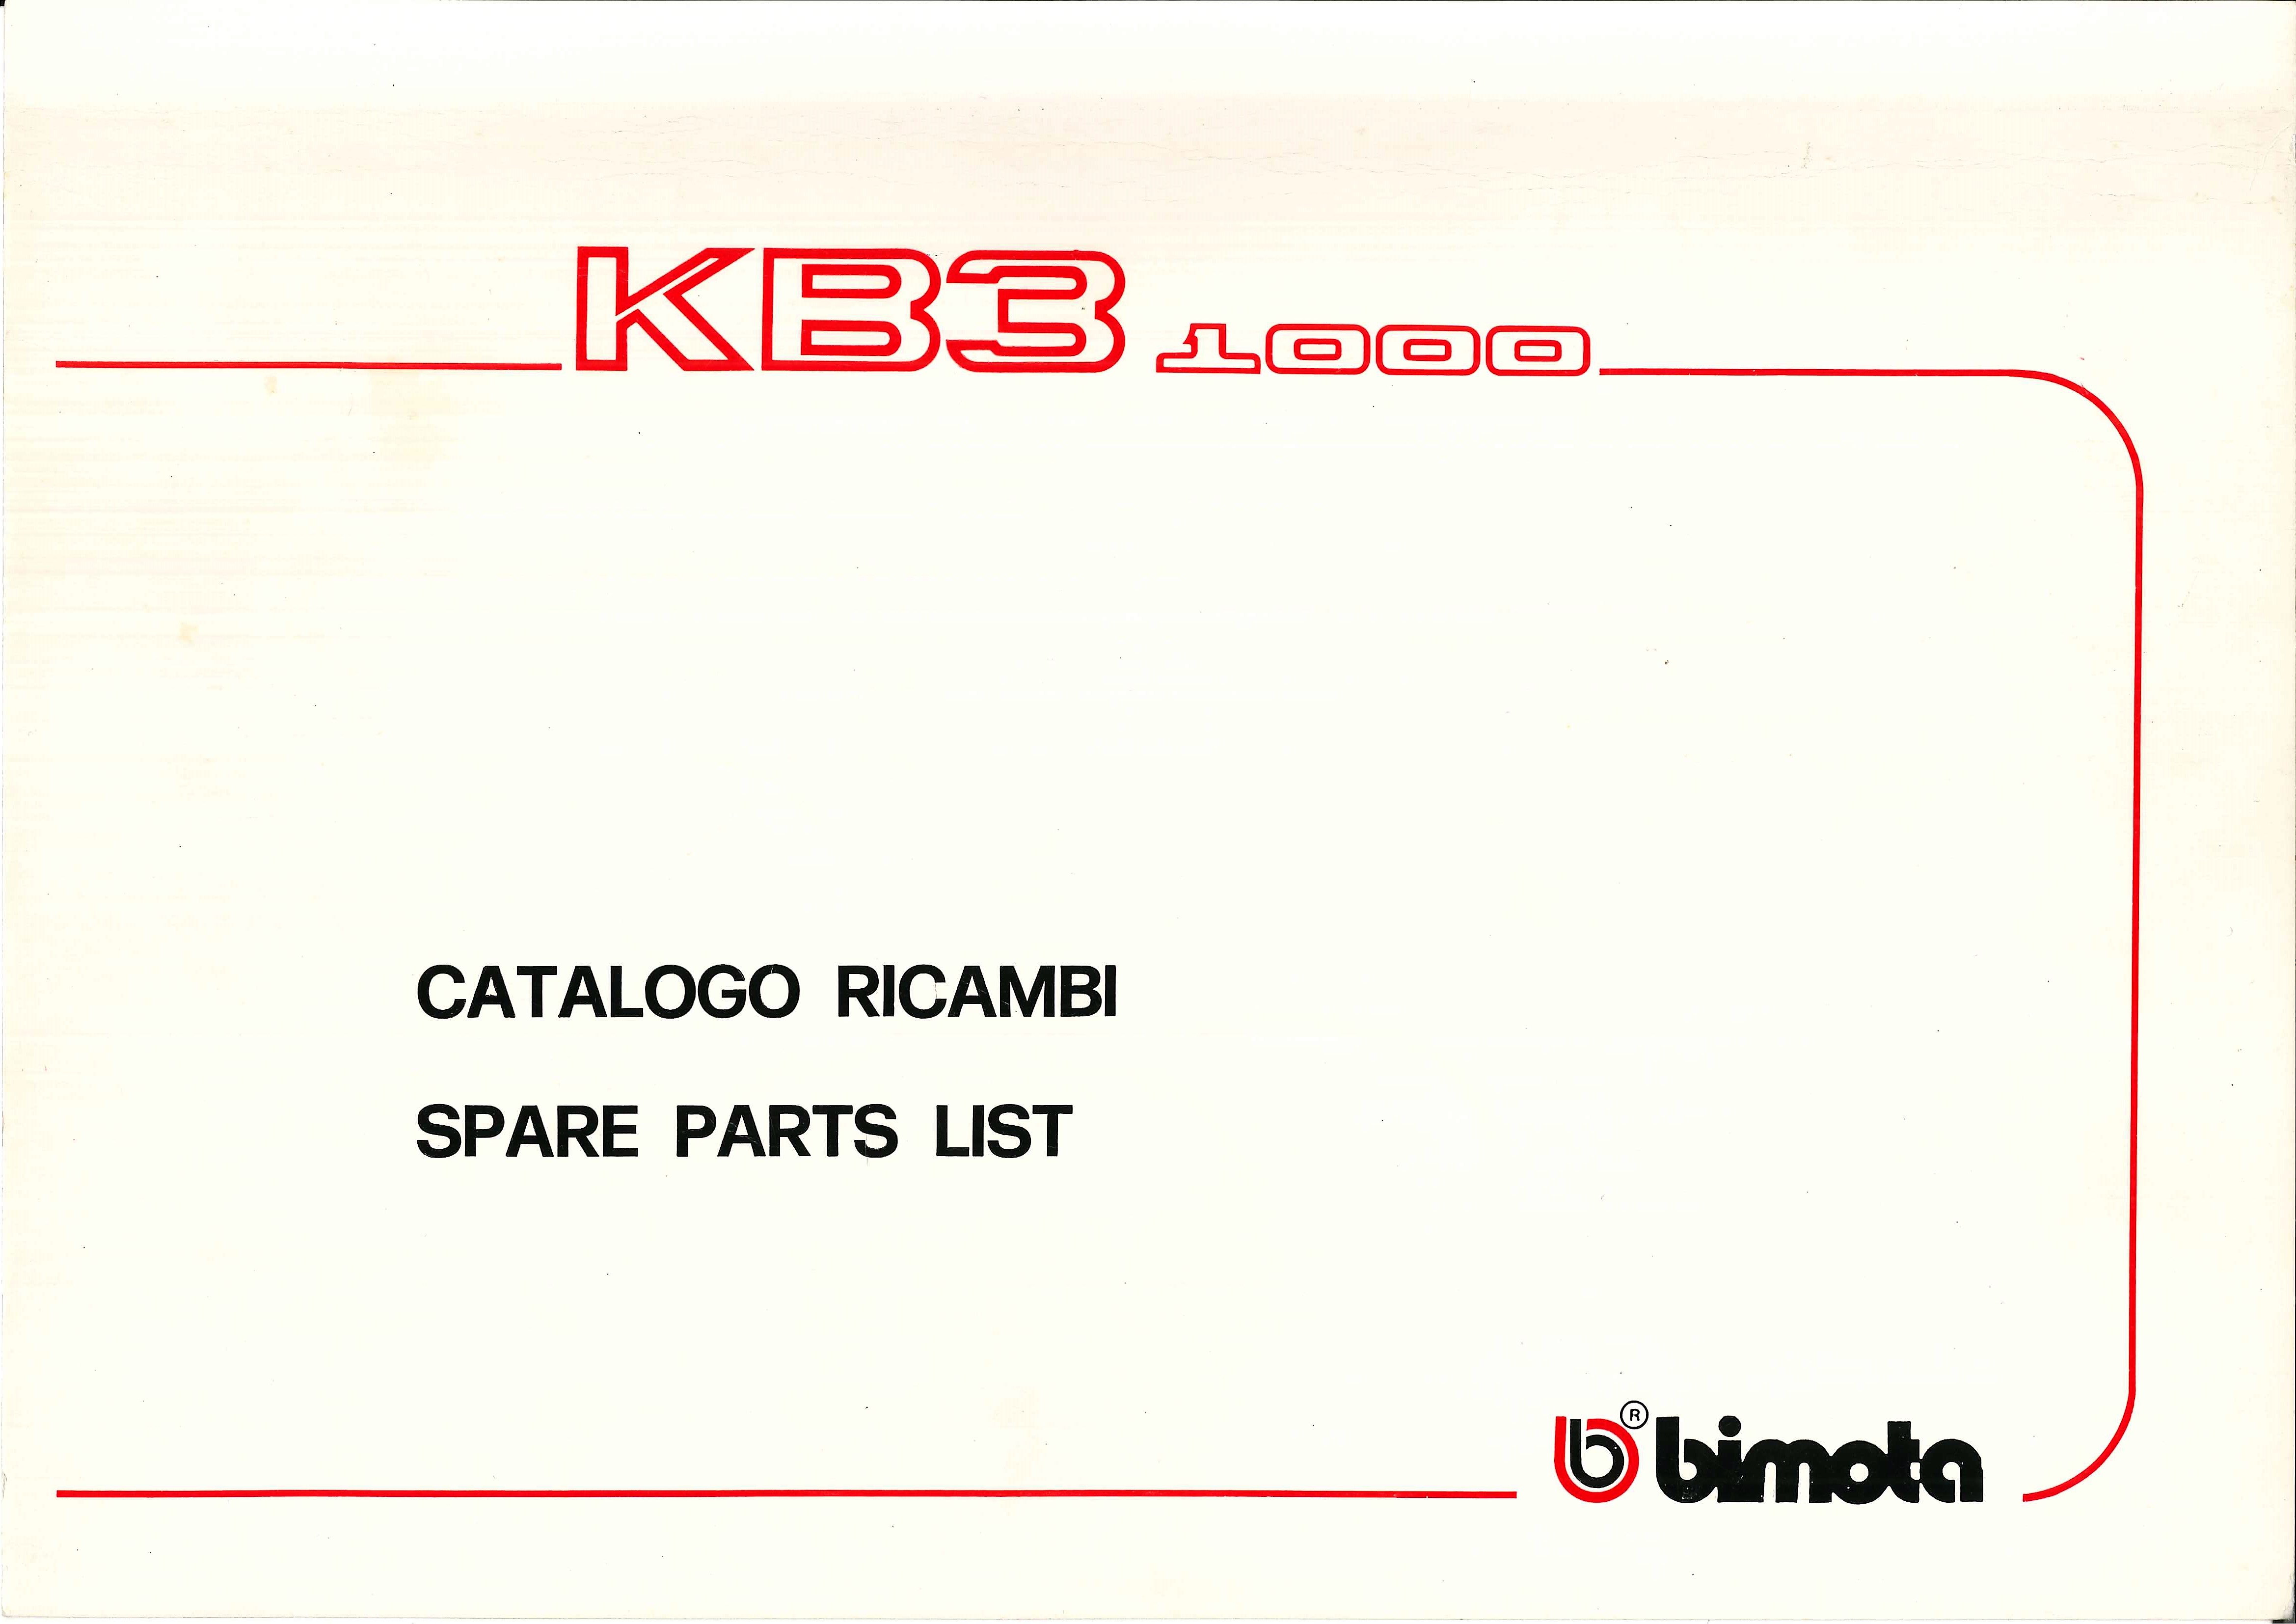 MANUALE RICAMBI BIMOTA KB3 1000